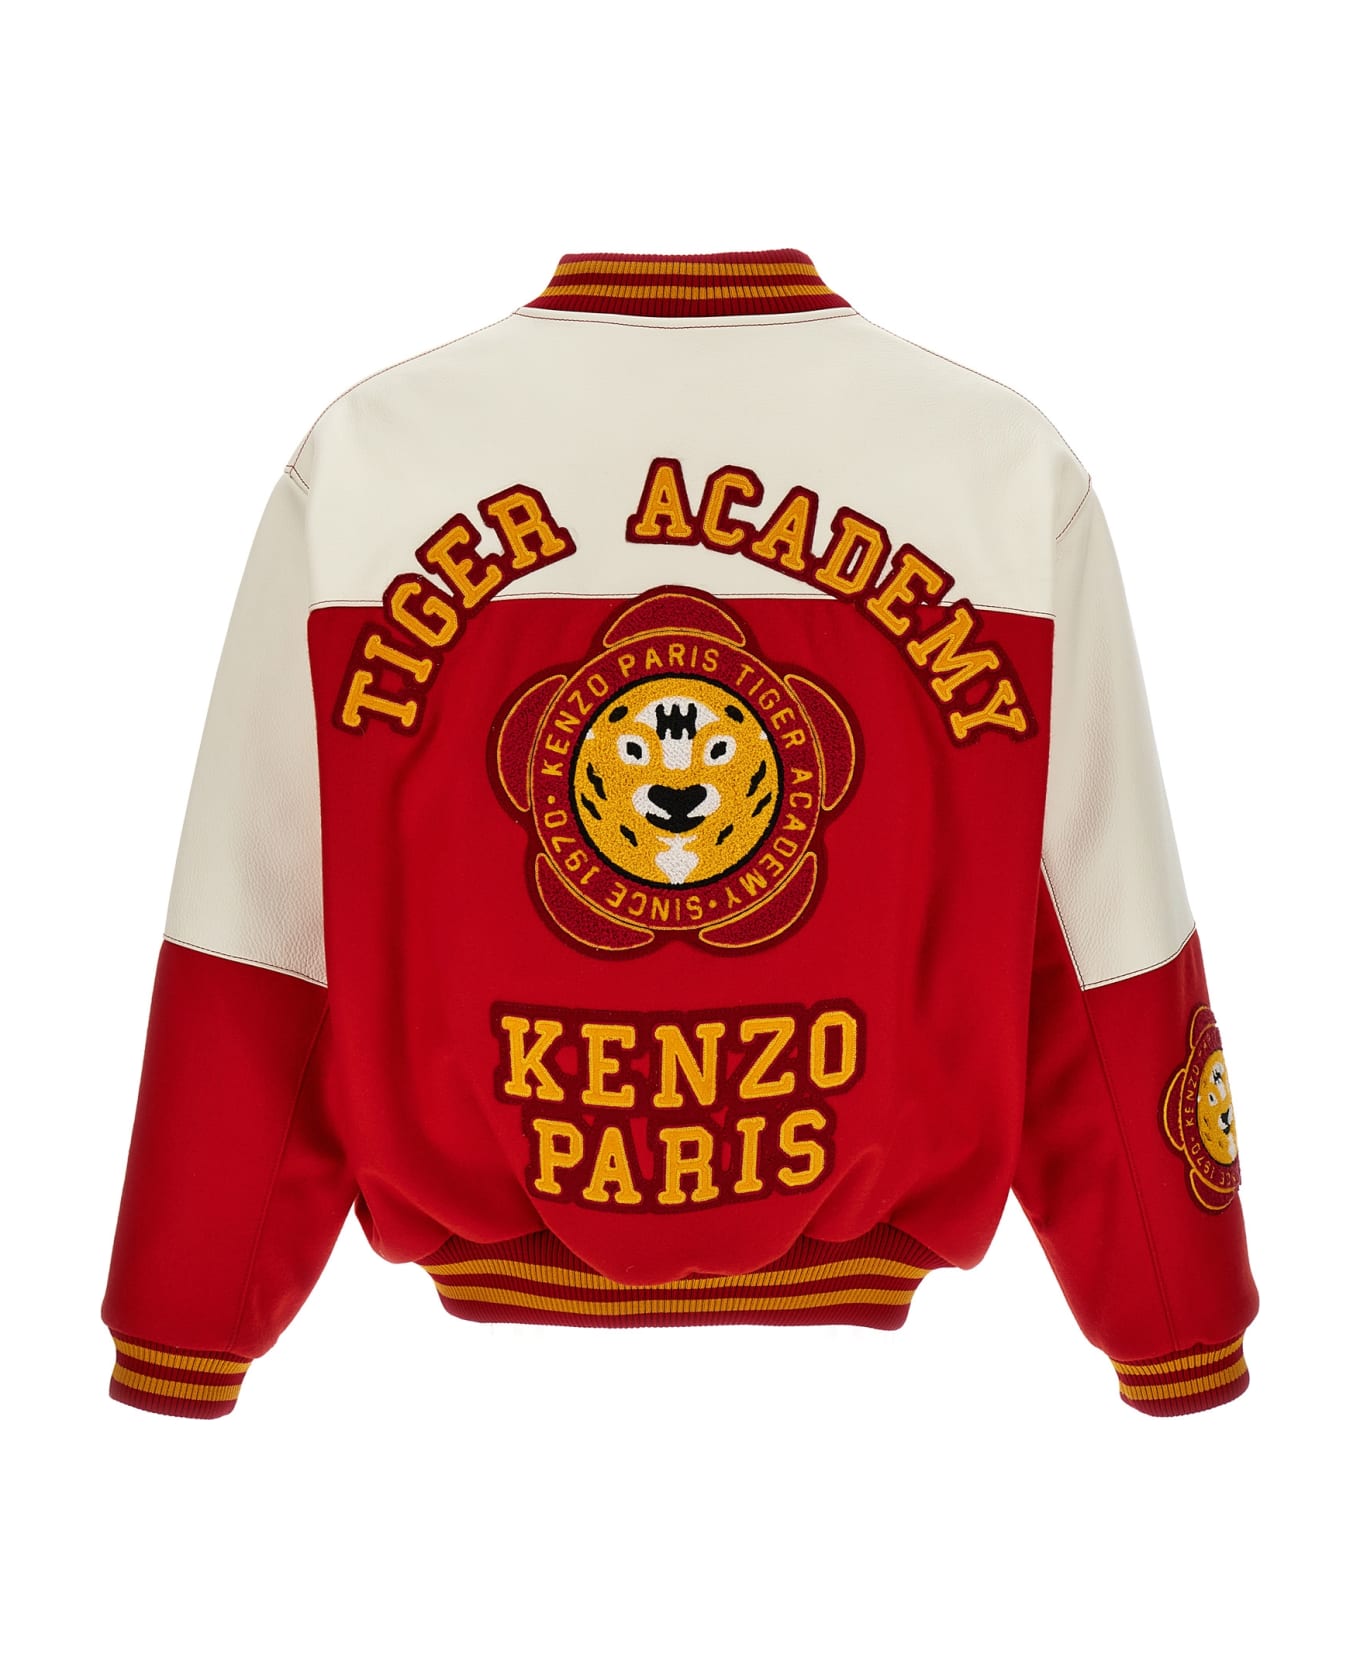 Kenzo 'varsity' Bomber Jacket - Red